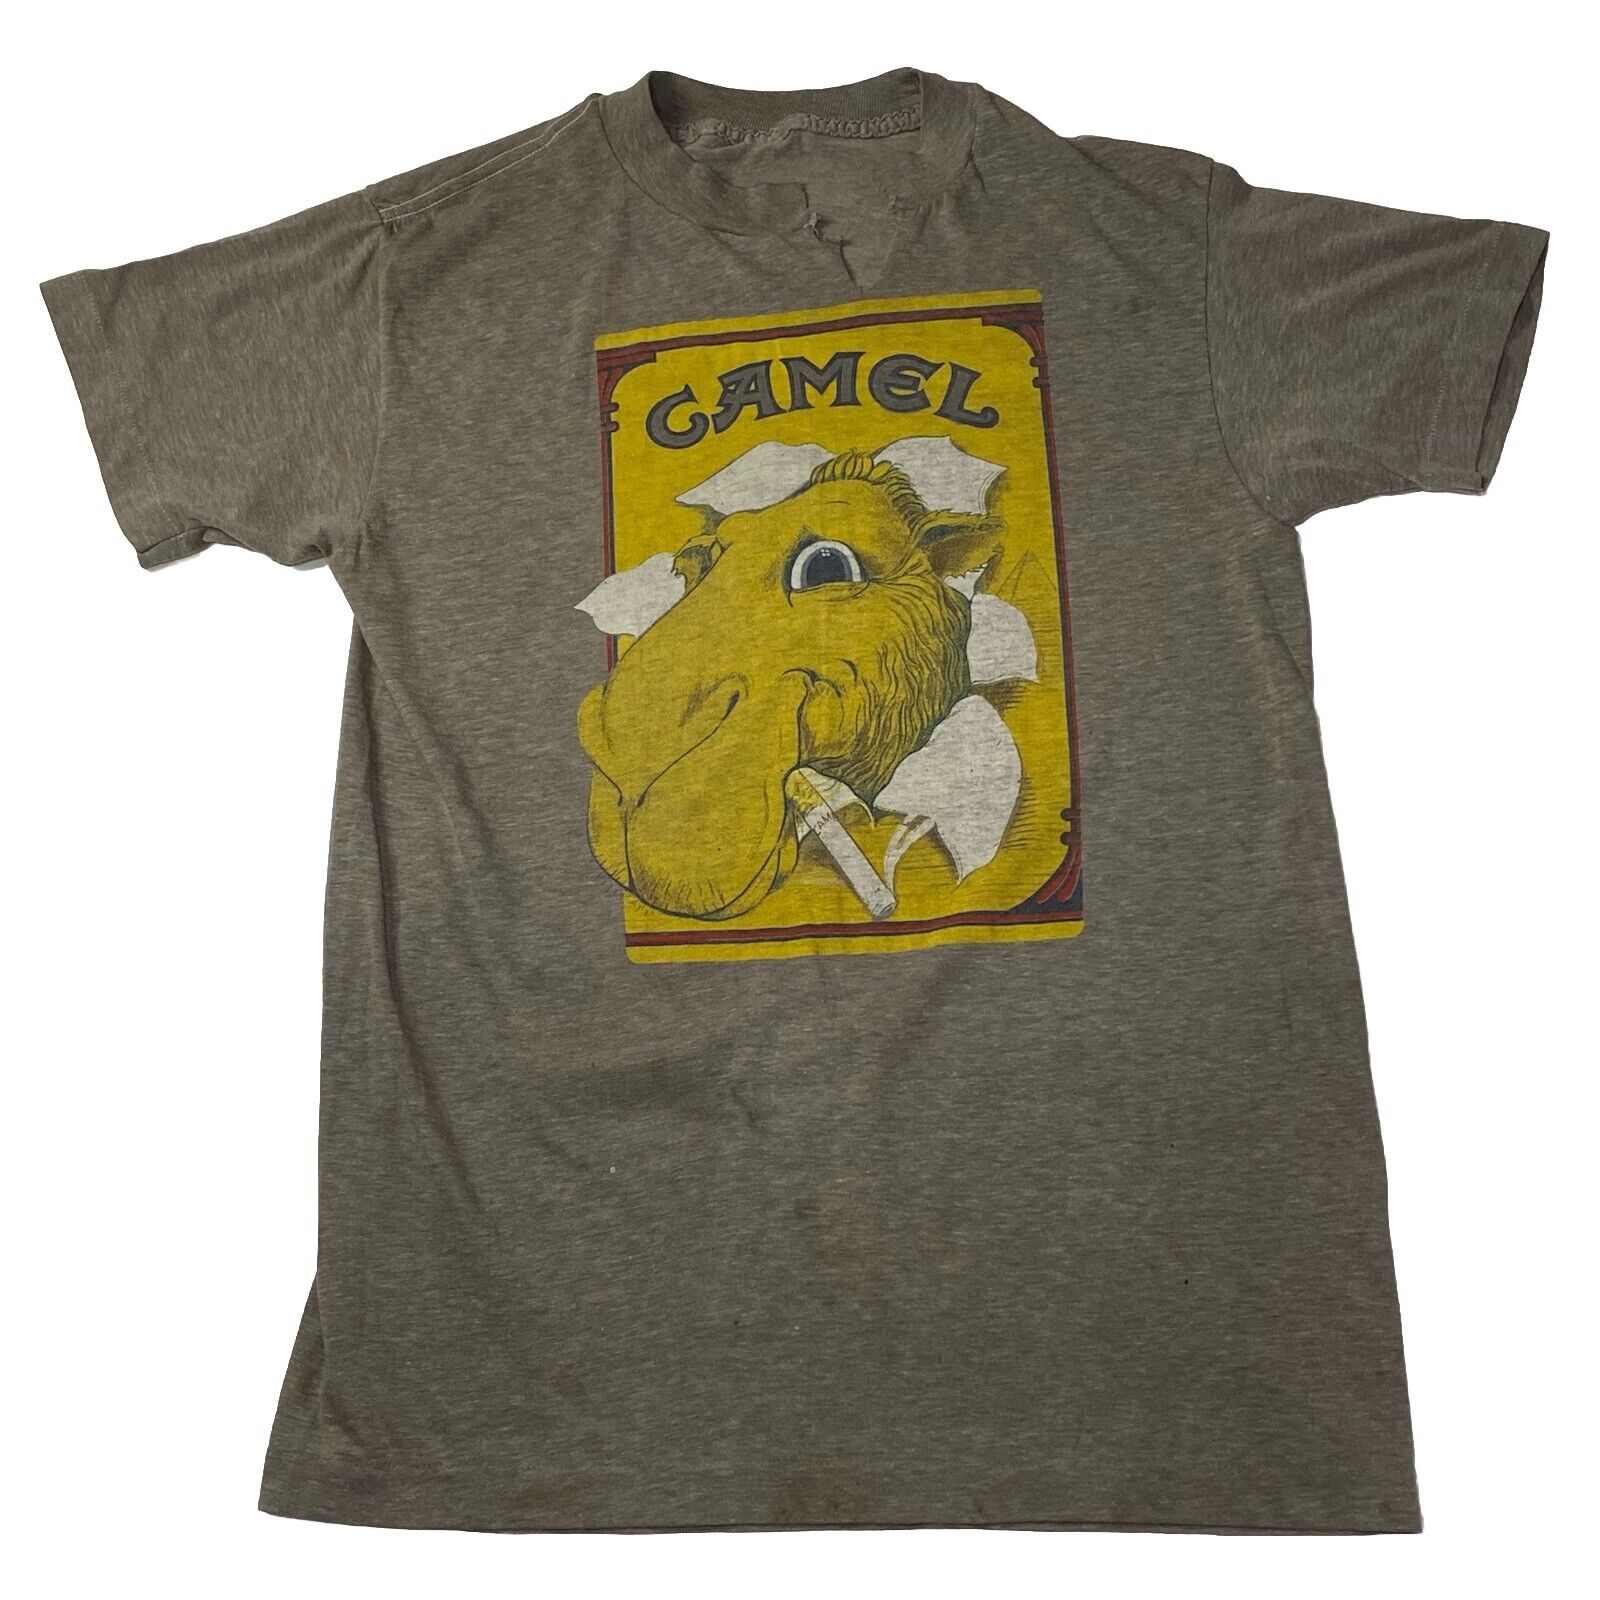 Vintage 80’s Joe Camel Cigarettes T Shirt Distressed Single Stitch USA Made S/ M